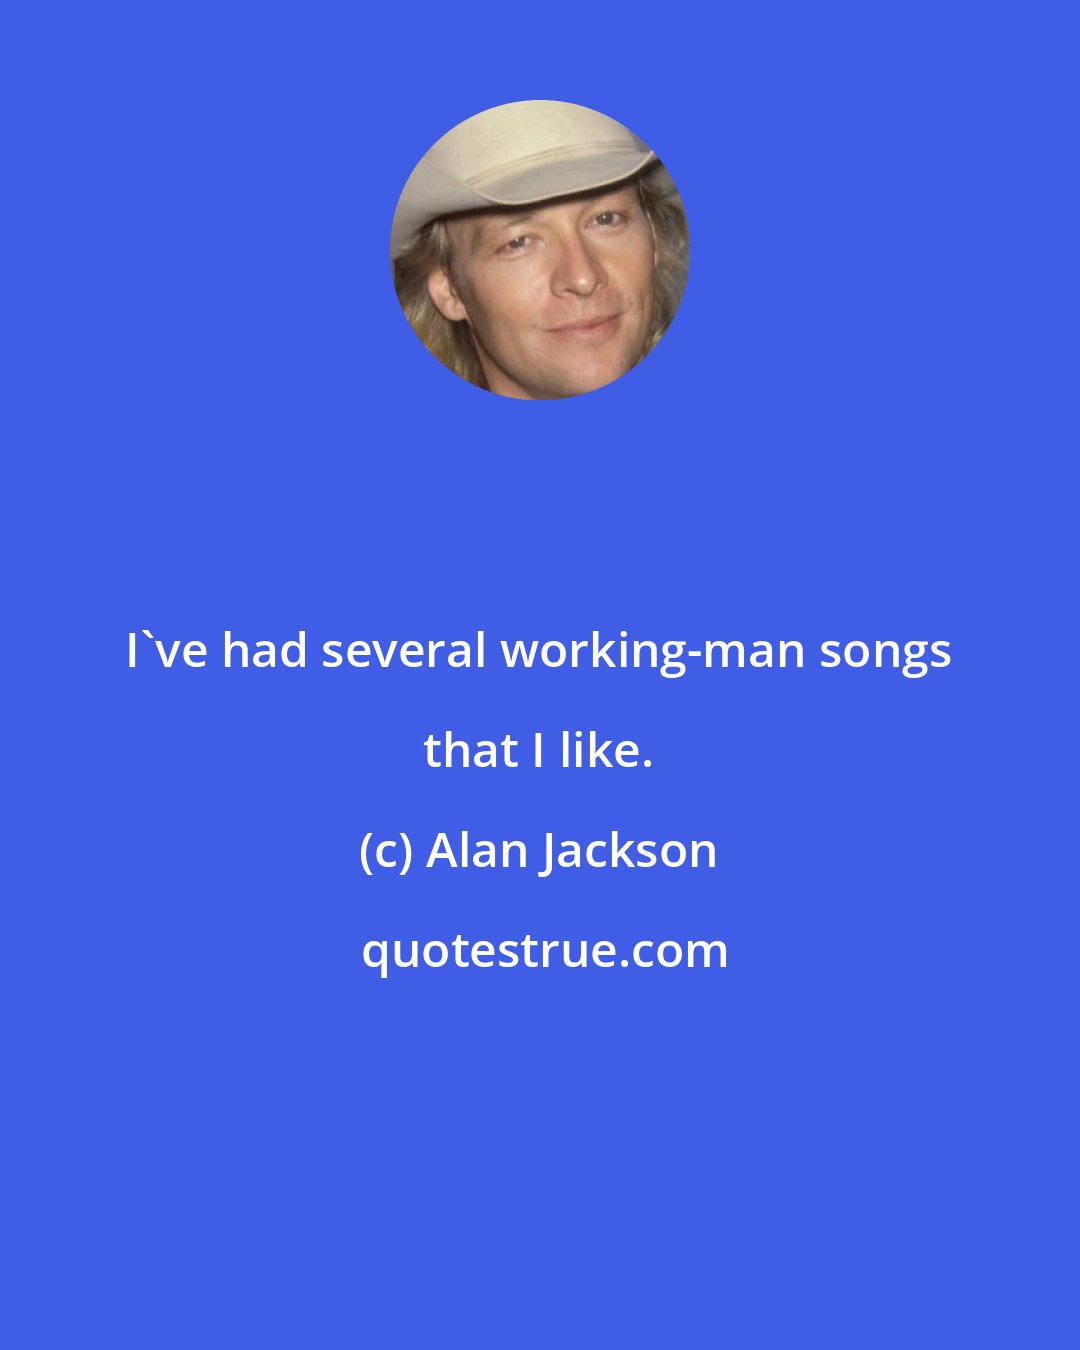 Alan Jackson: I've had several working-man songs that I like.